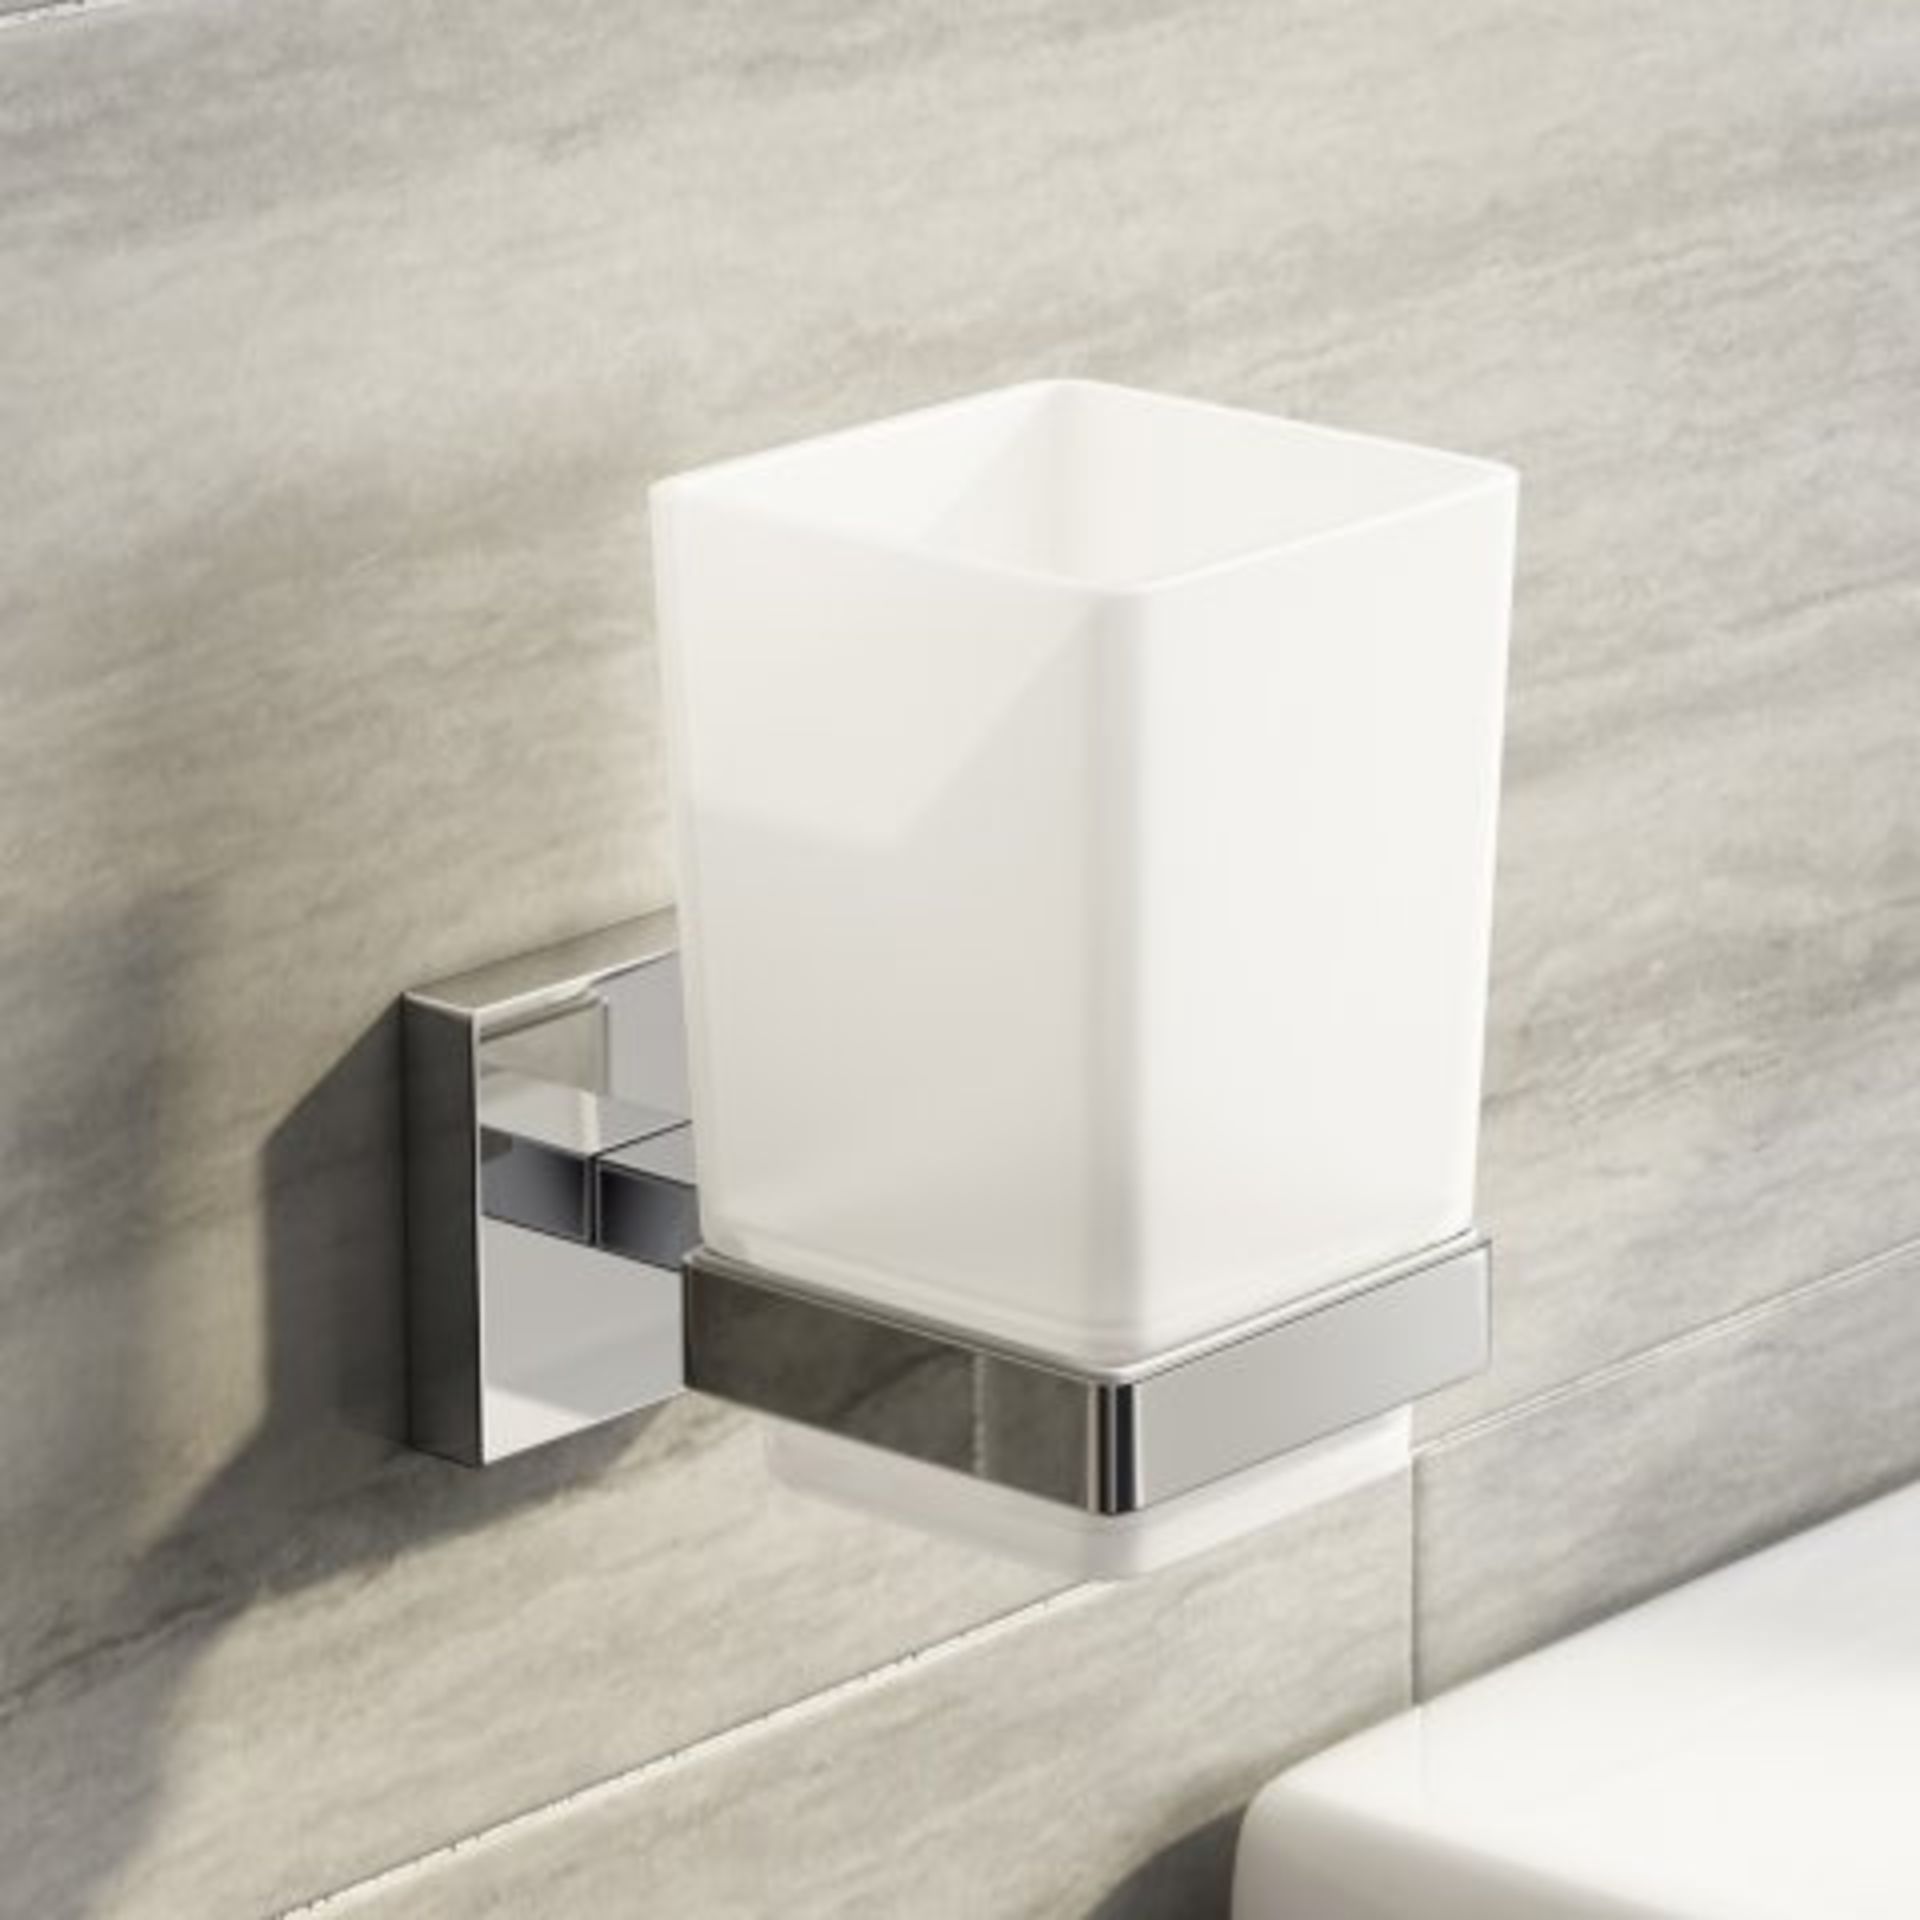 (I130) Jesmond Tumbler Holder Tumbler and holder designed for a modern bathroom. The square design